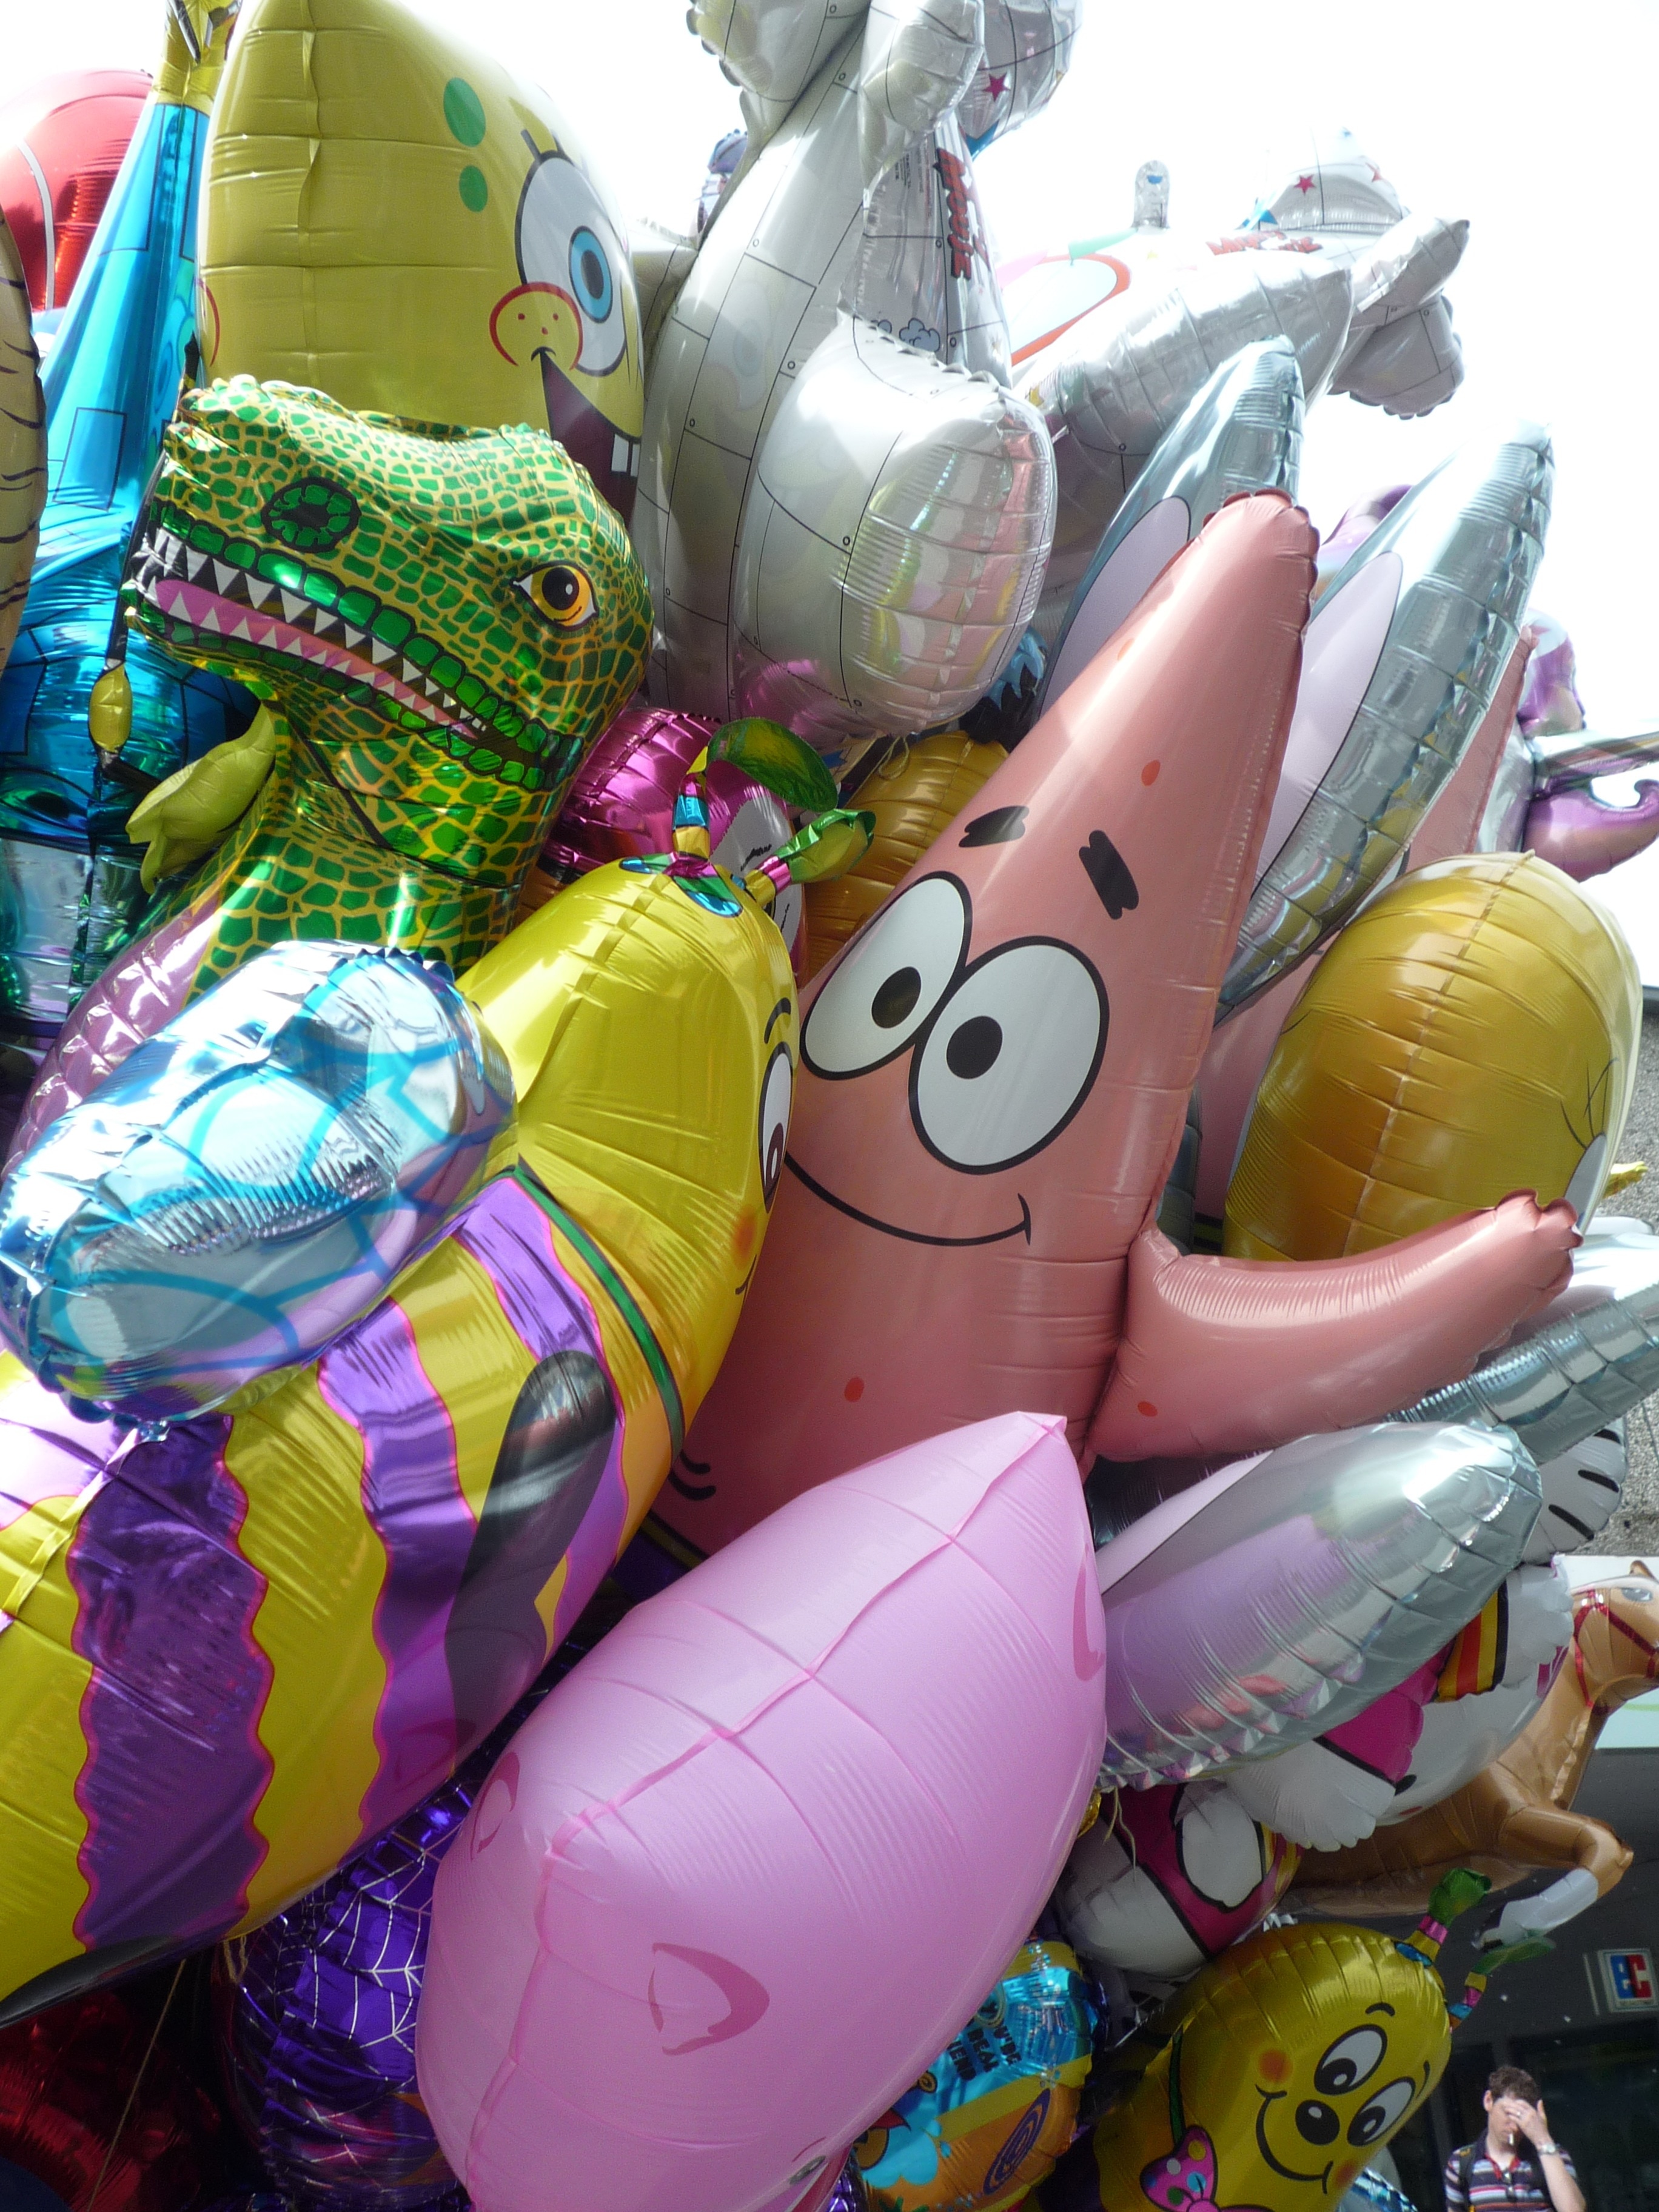 spongebob squarepants and patrick star balloon